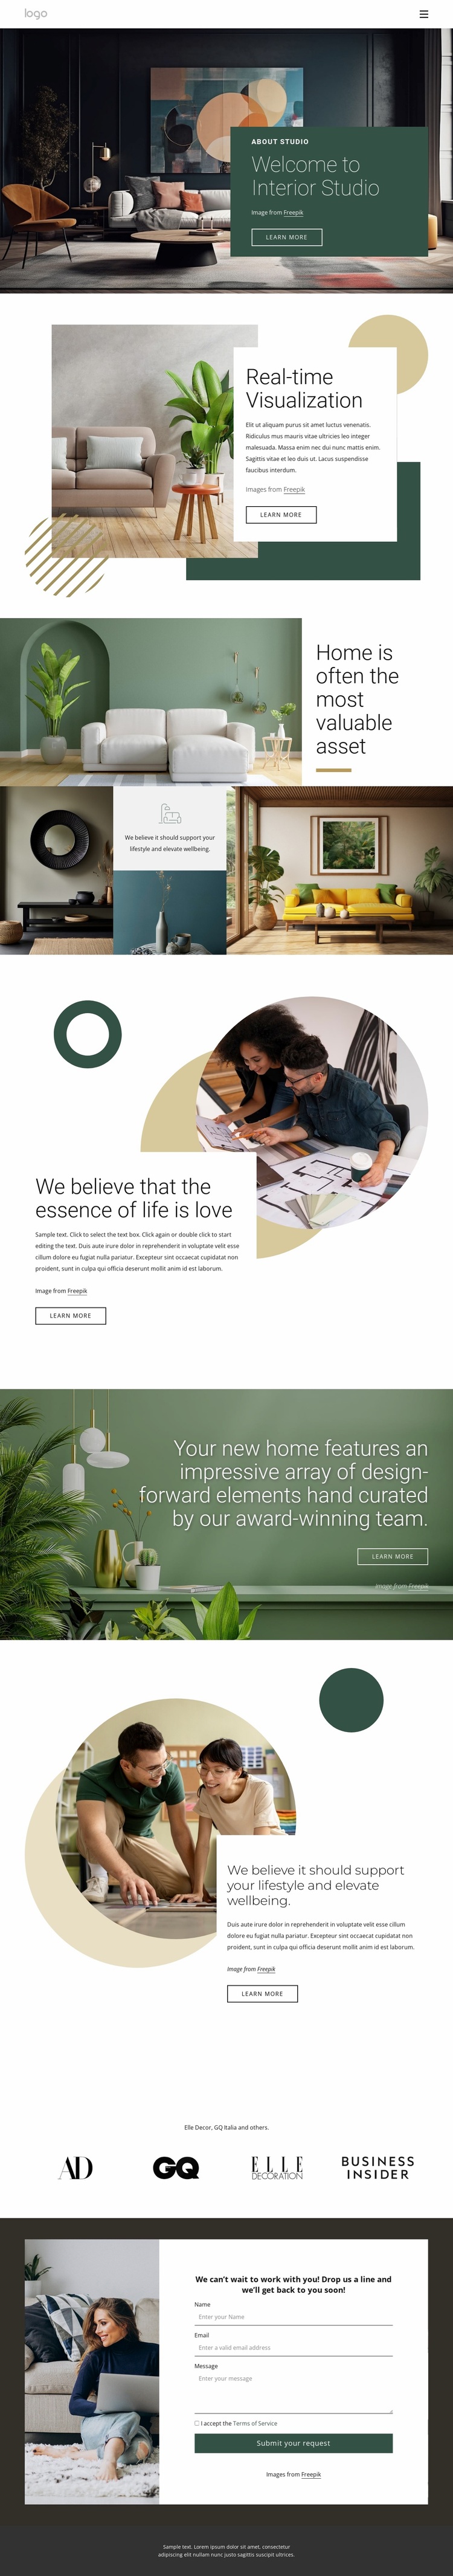 Award-winning interior design studio Website Design